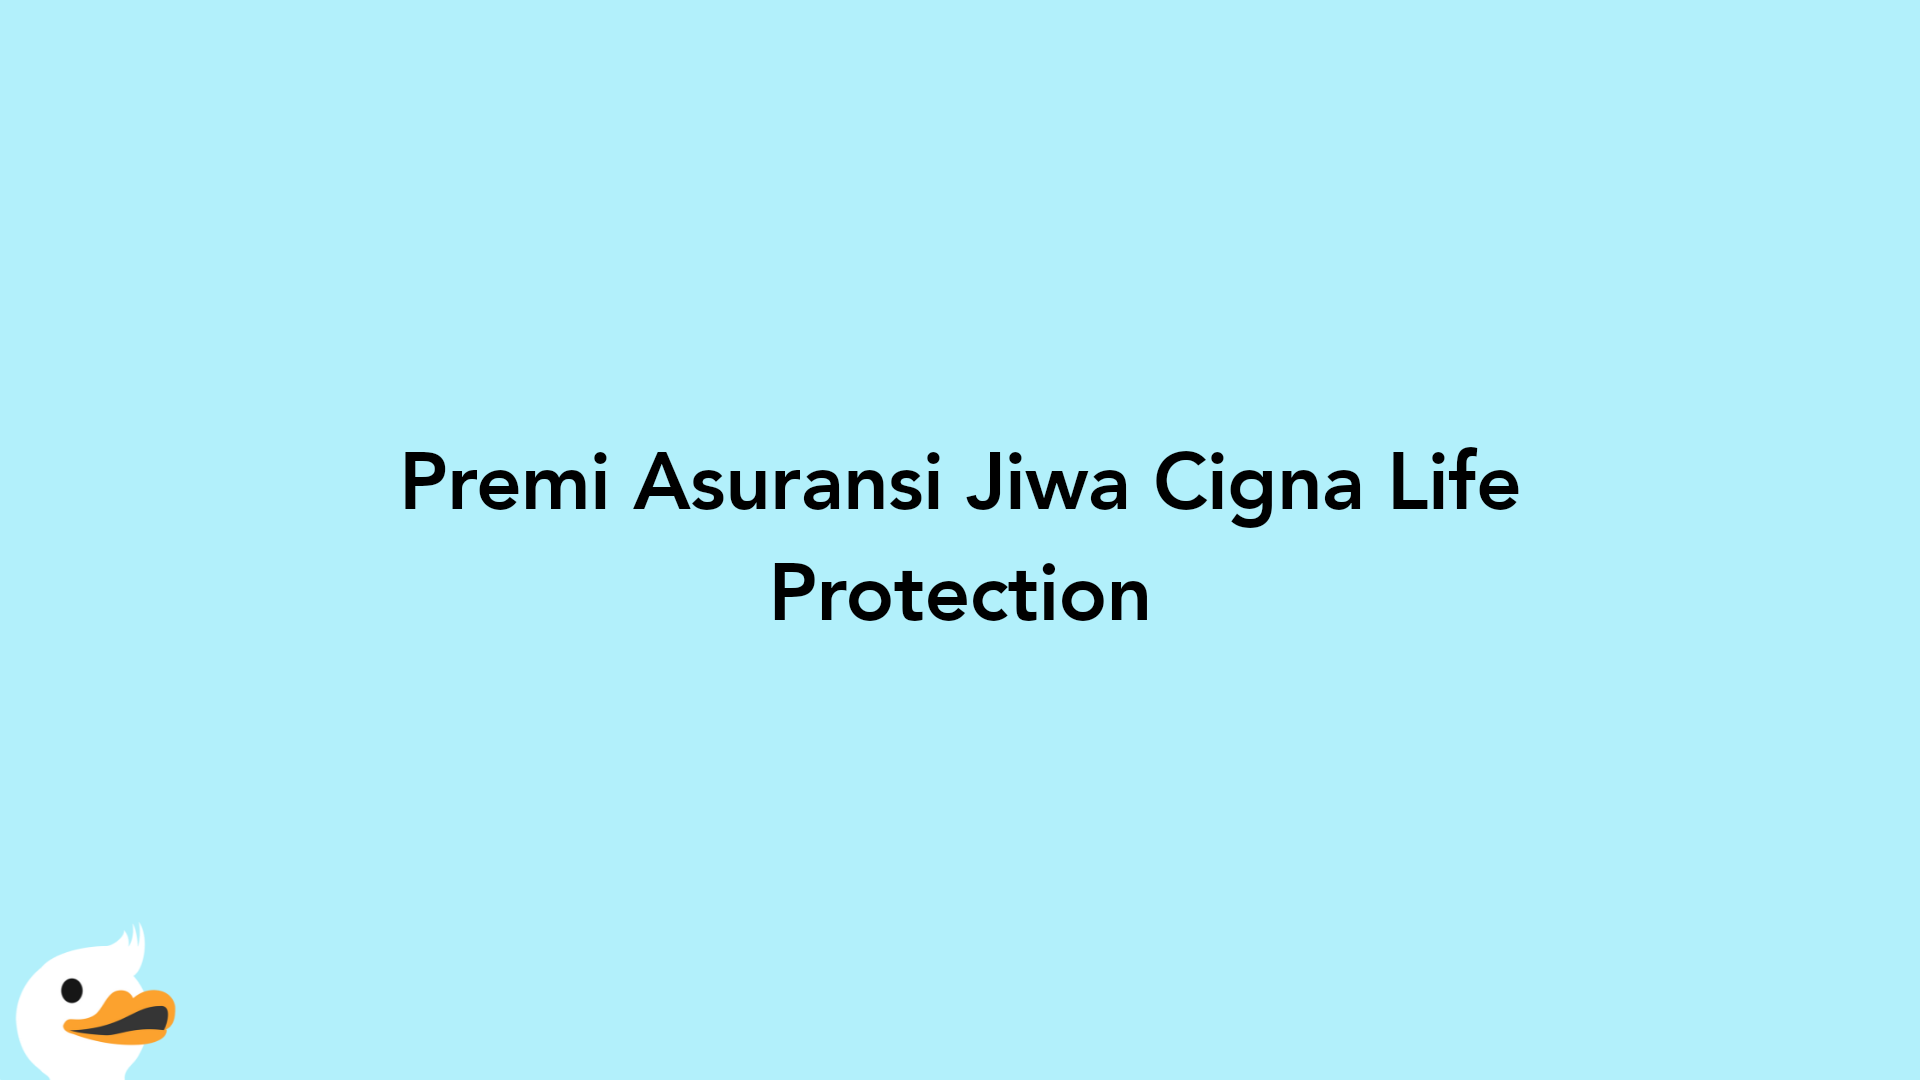 Premi Asuransi Jiwa Cigna Life Protection